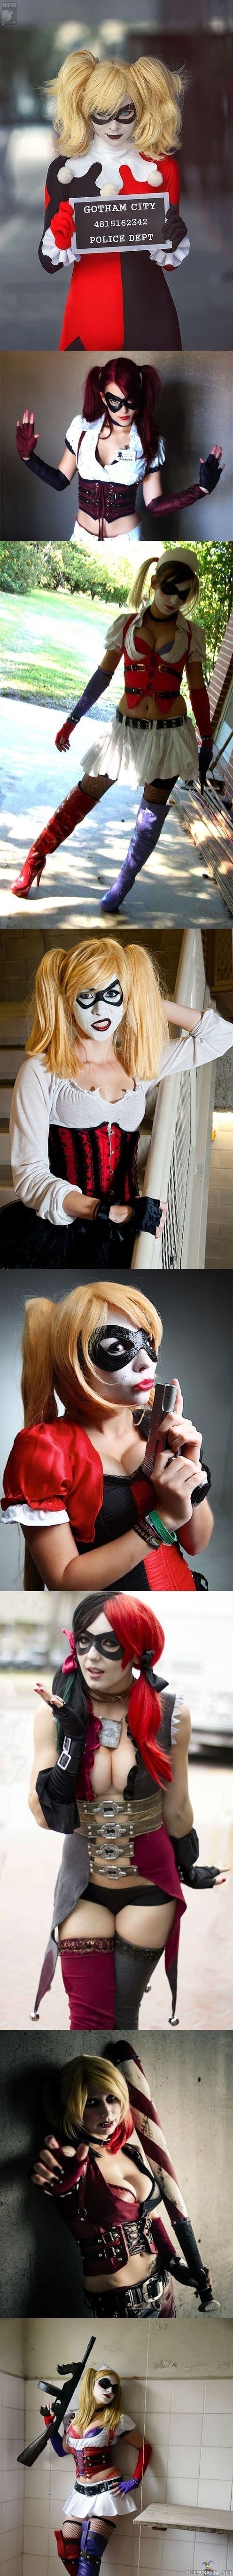 Harley Quinn - Batman cosplay